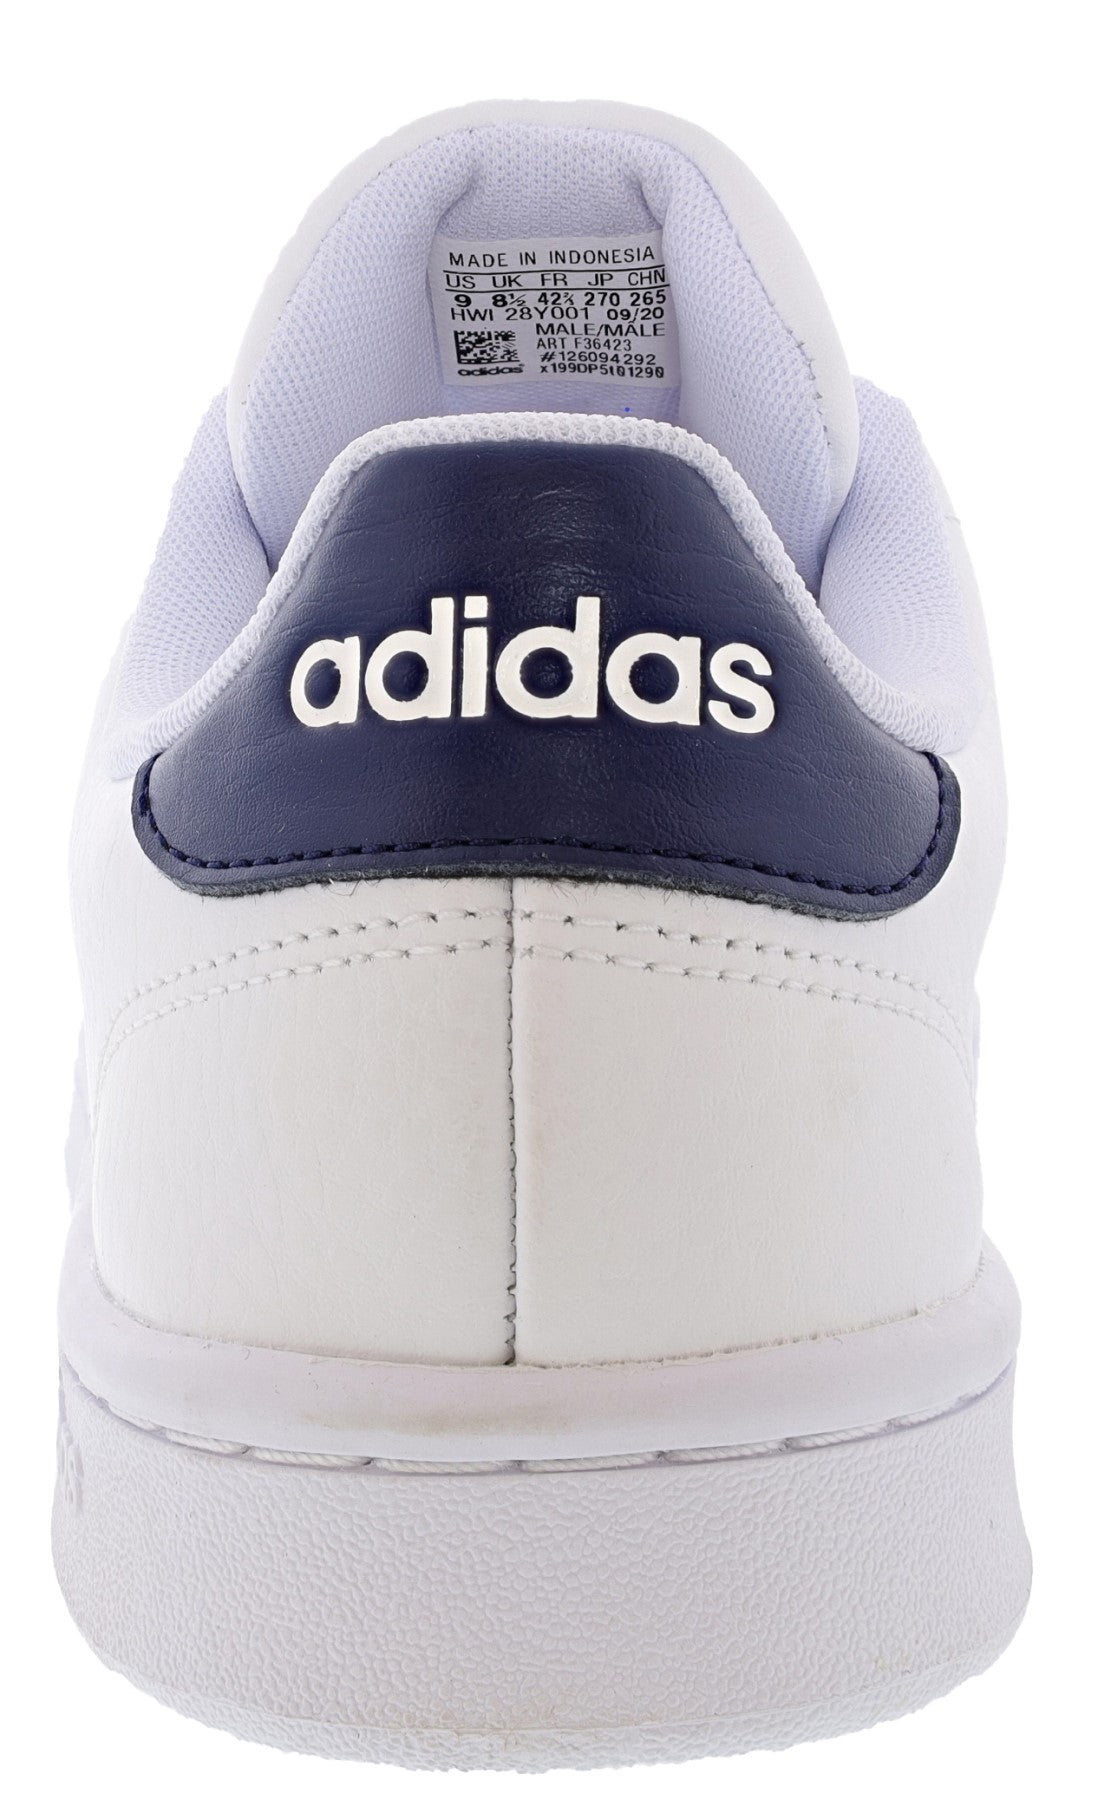 
                  
                    Back angle of Outside view of white Adidas Men's Advantage Base Sneaker Shoes
                  
                